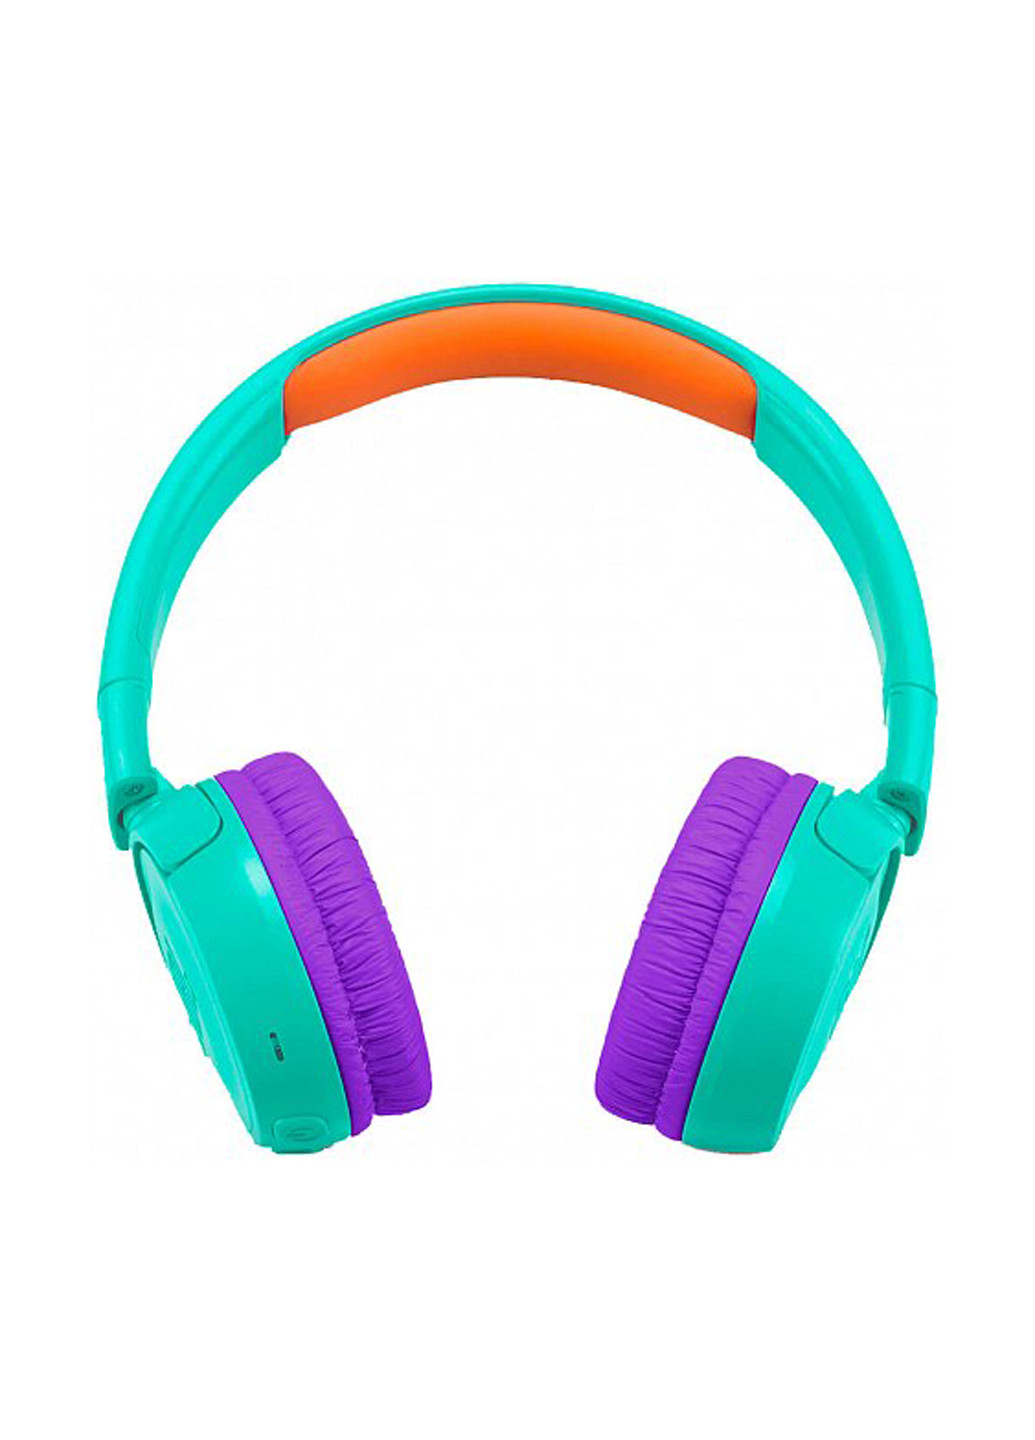 Бездротові навушники для дітей JR 300 BT Tropic Teal (JR300BTTEL) JBL беспроводные для детей jr 300 bt tropic teal (jbljr300bttel) (160880255)